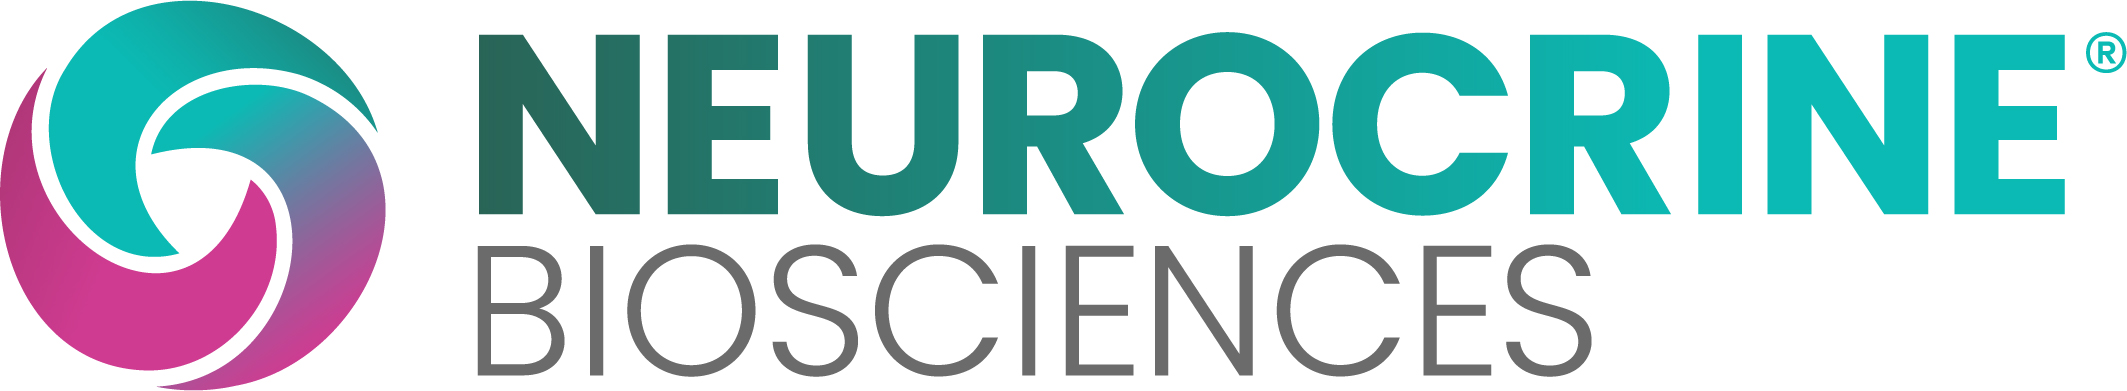 Neurocrine_logo